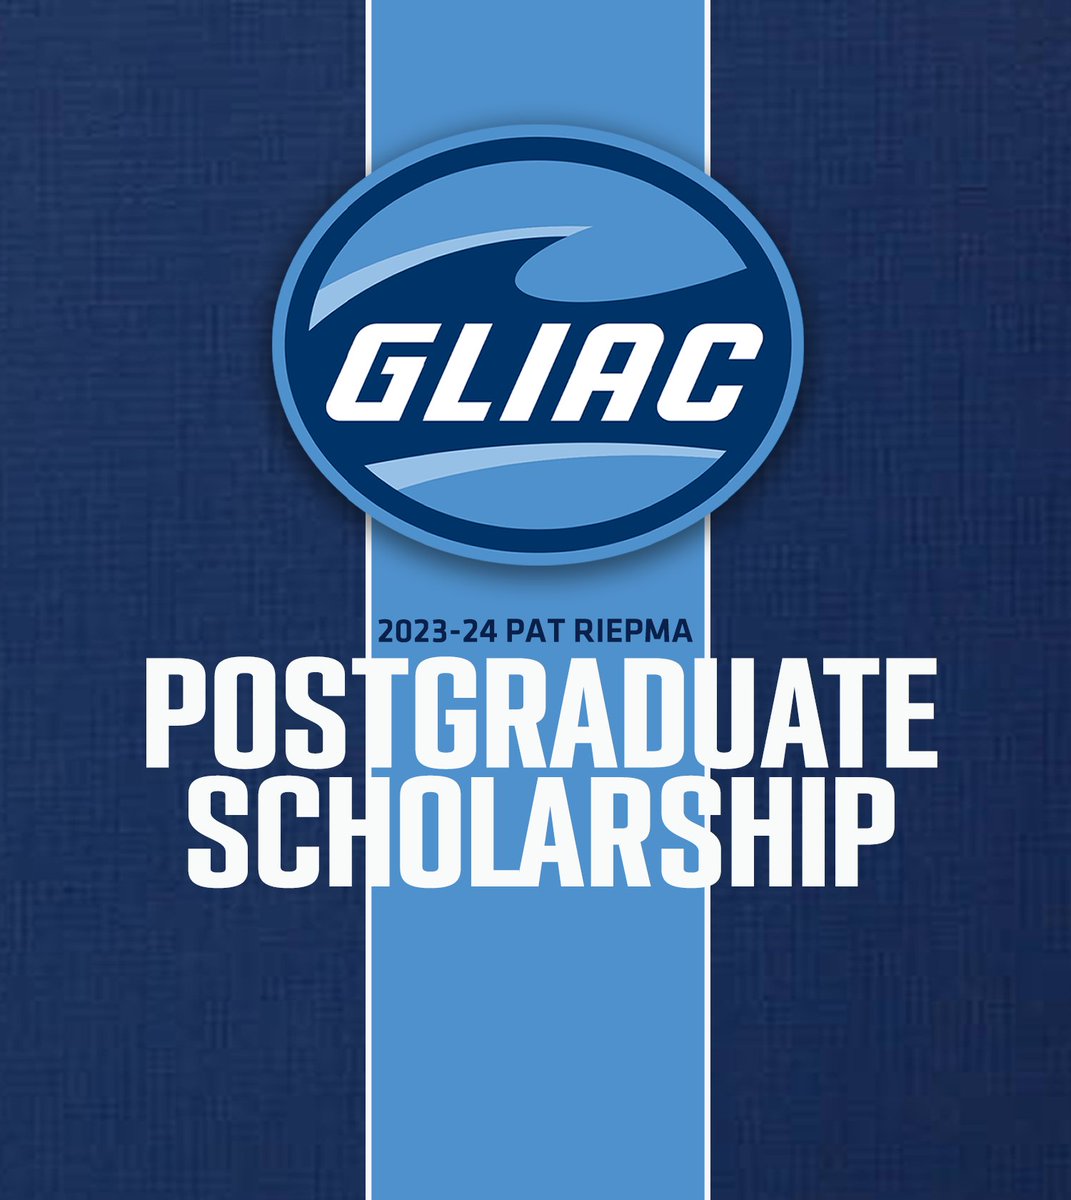 Michigan Tech's Vitor Jordao and Gracie VanLangevelde named 2023-24 GLIAC Pat Riepma Postgraduate Scholarship recipients:

🔗 gliac.org/x/ubyl6

#WhereChampionsCompete